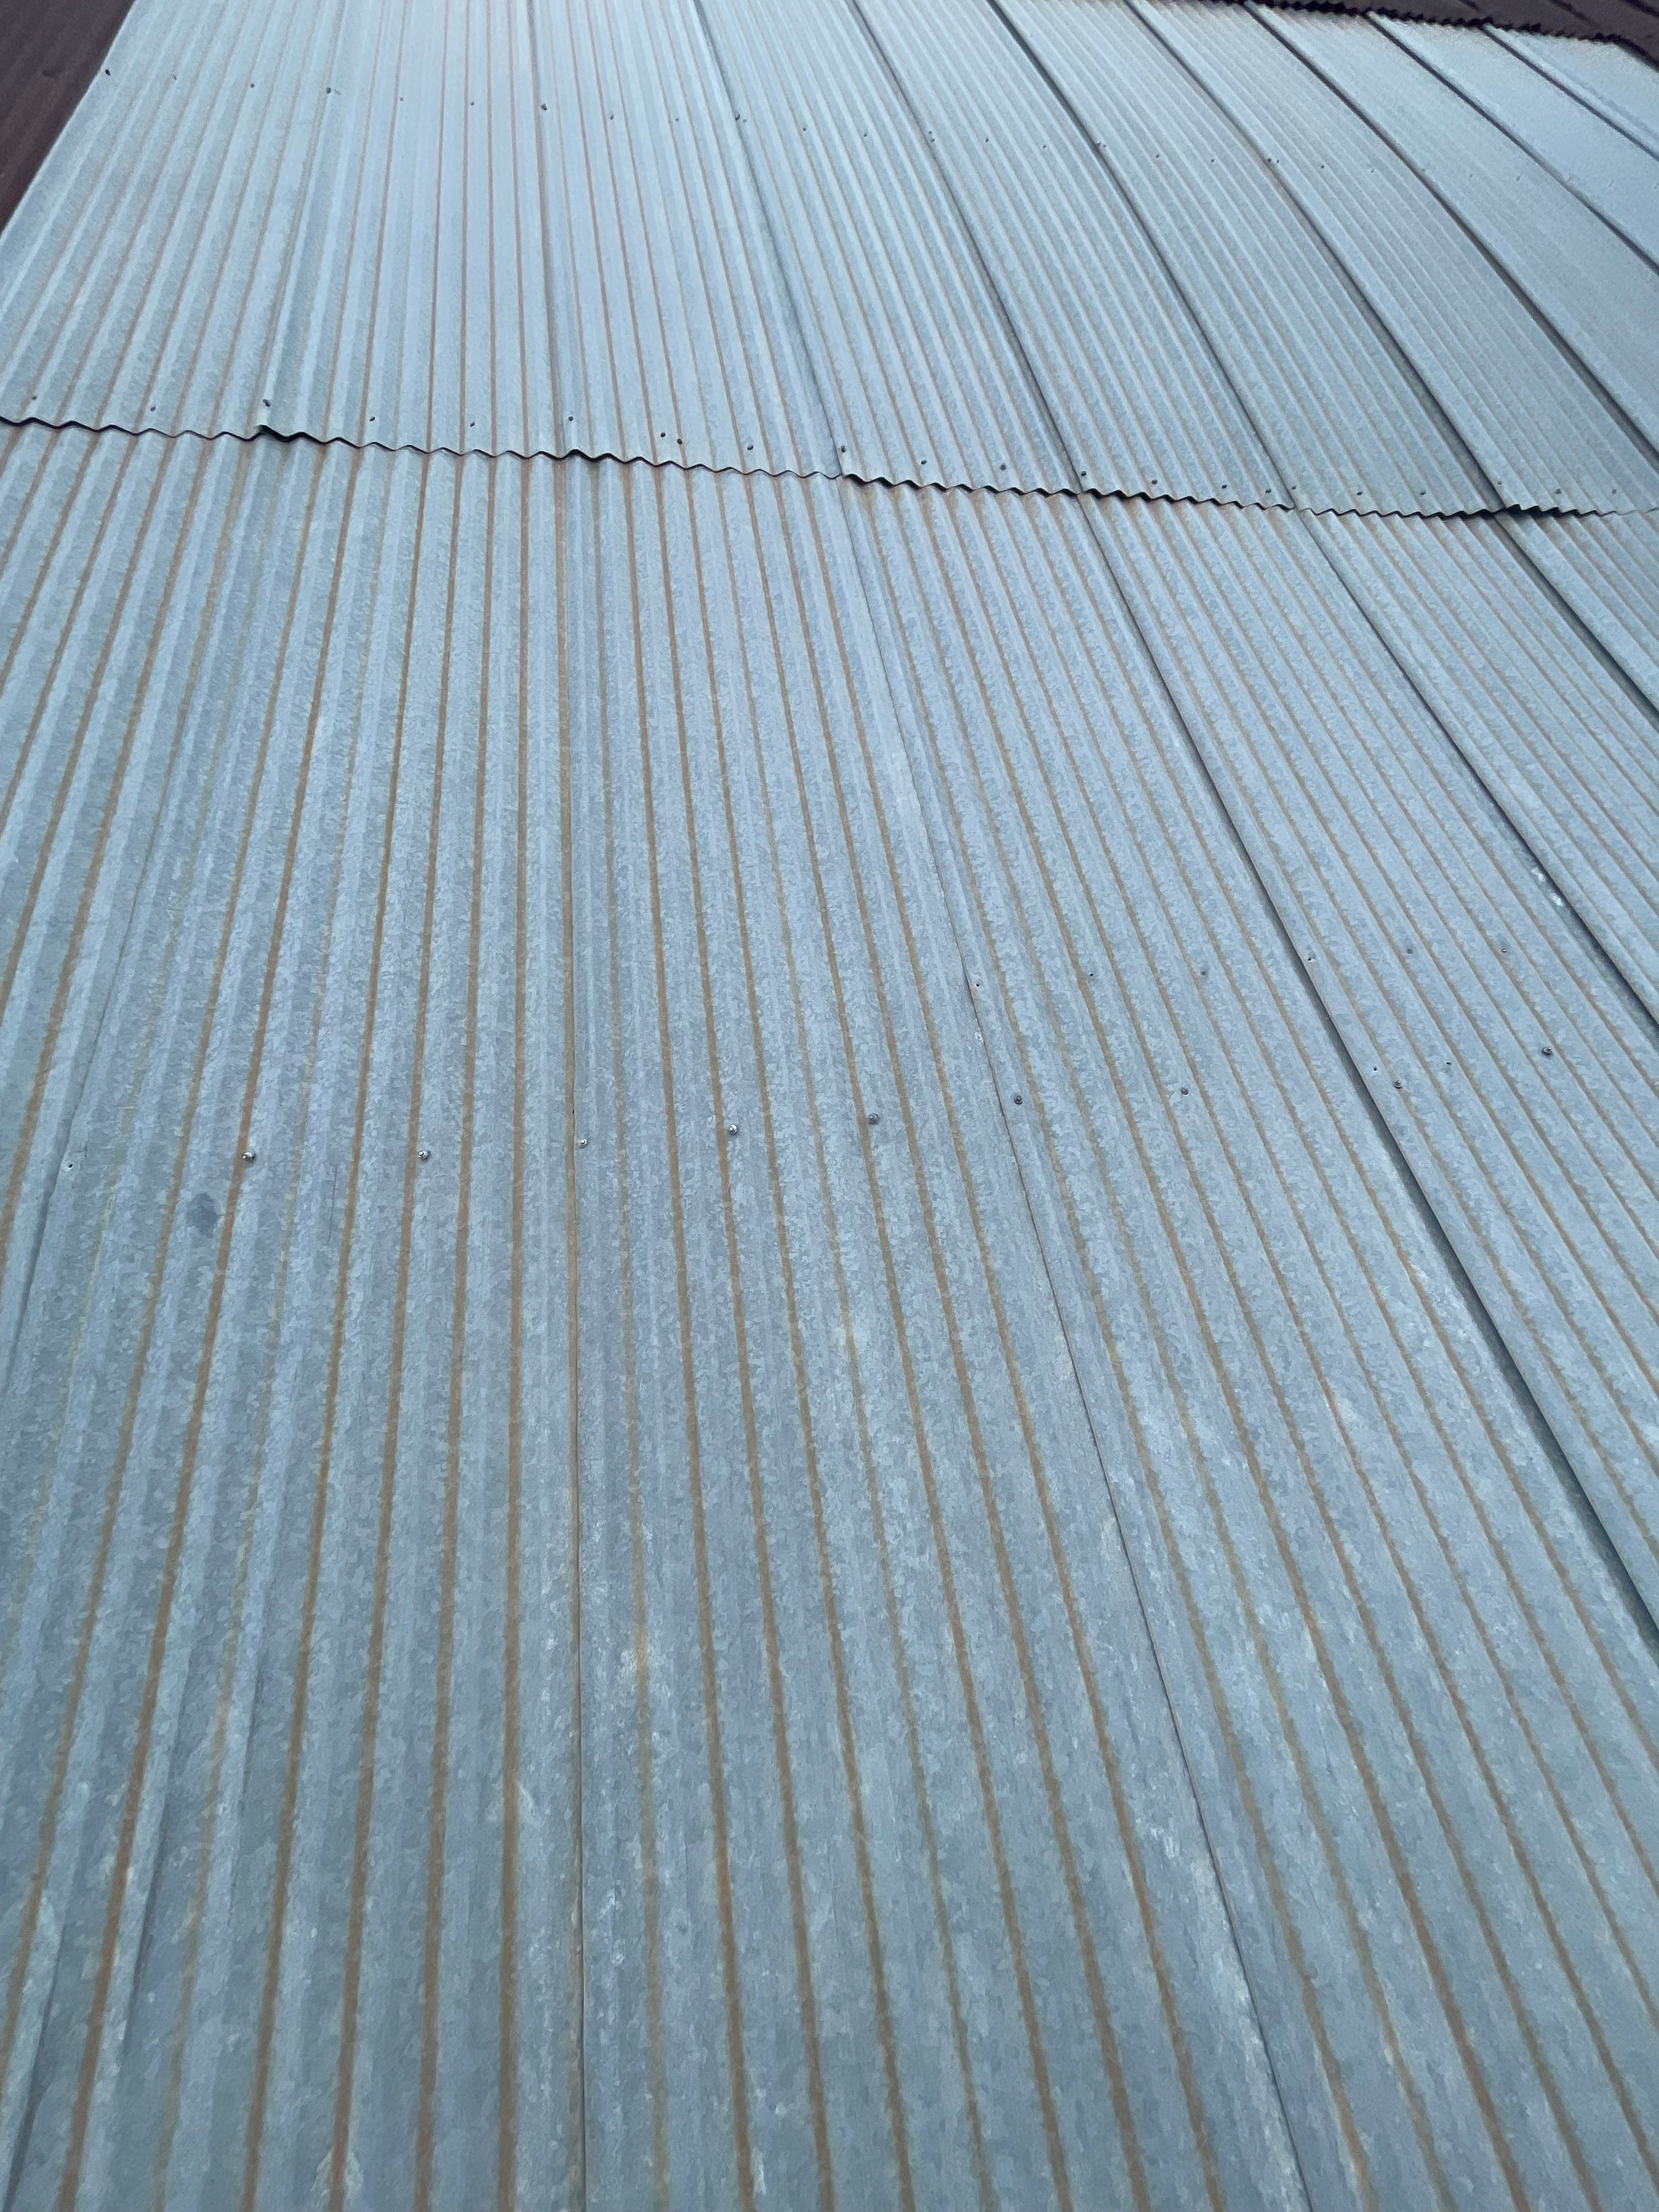 corrugated metal siding